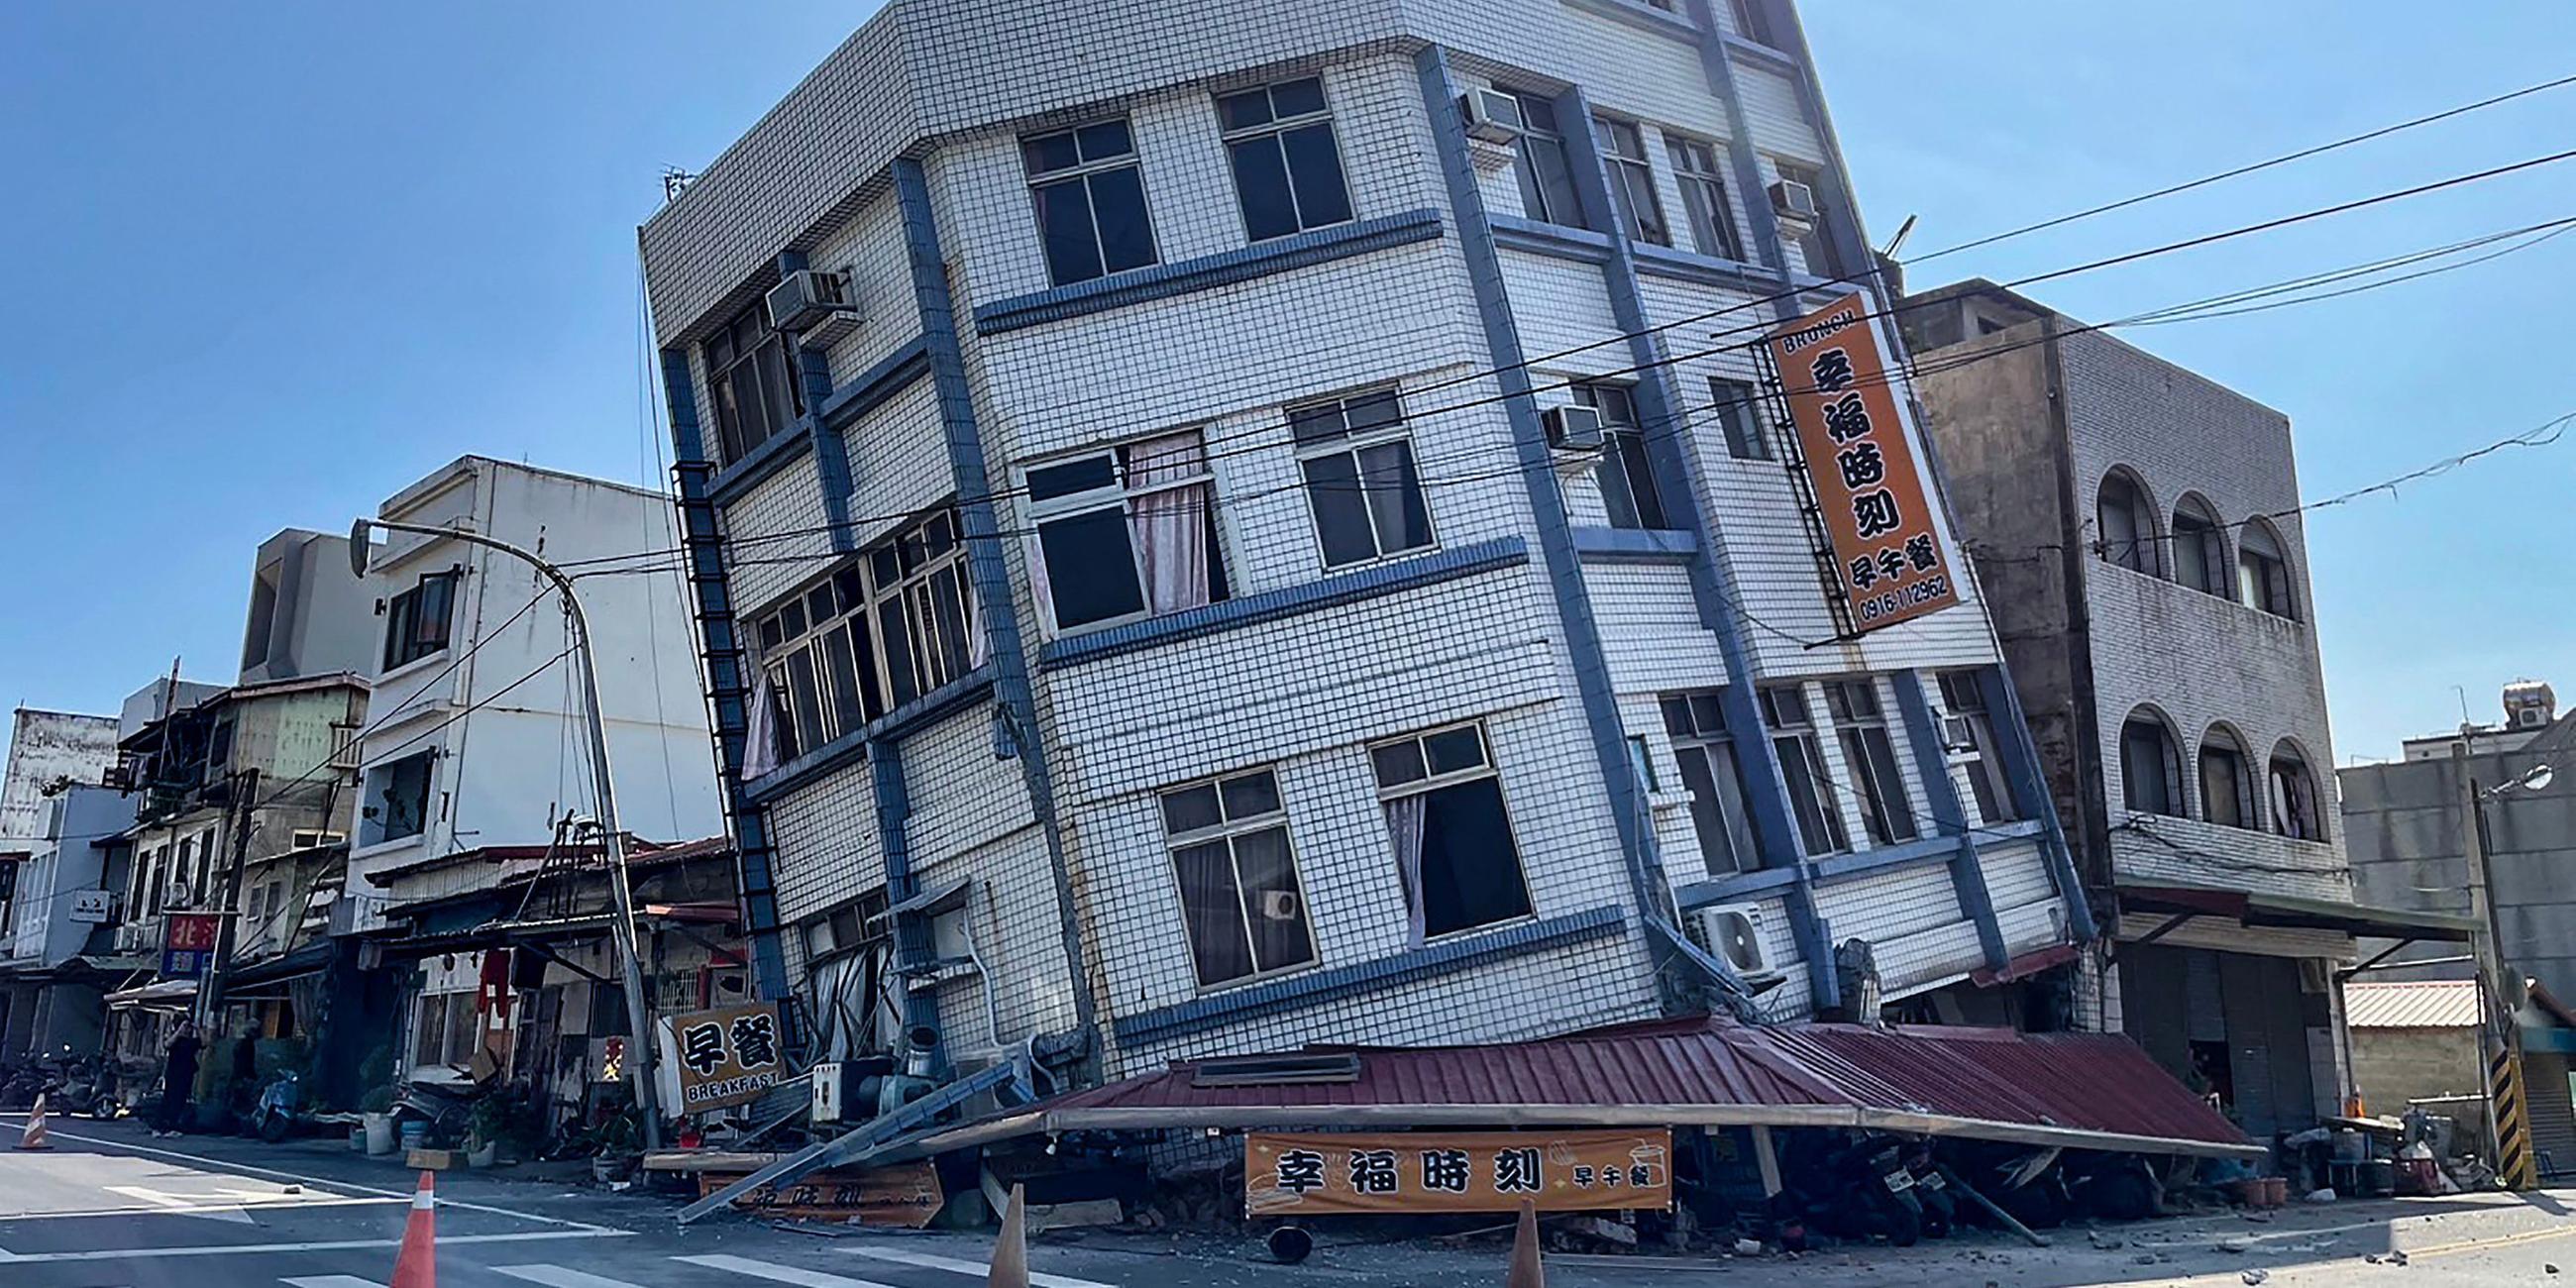 Erdbeben in Hualien (Taiwan)